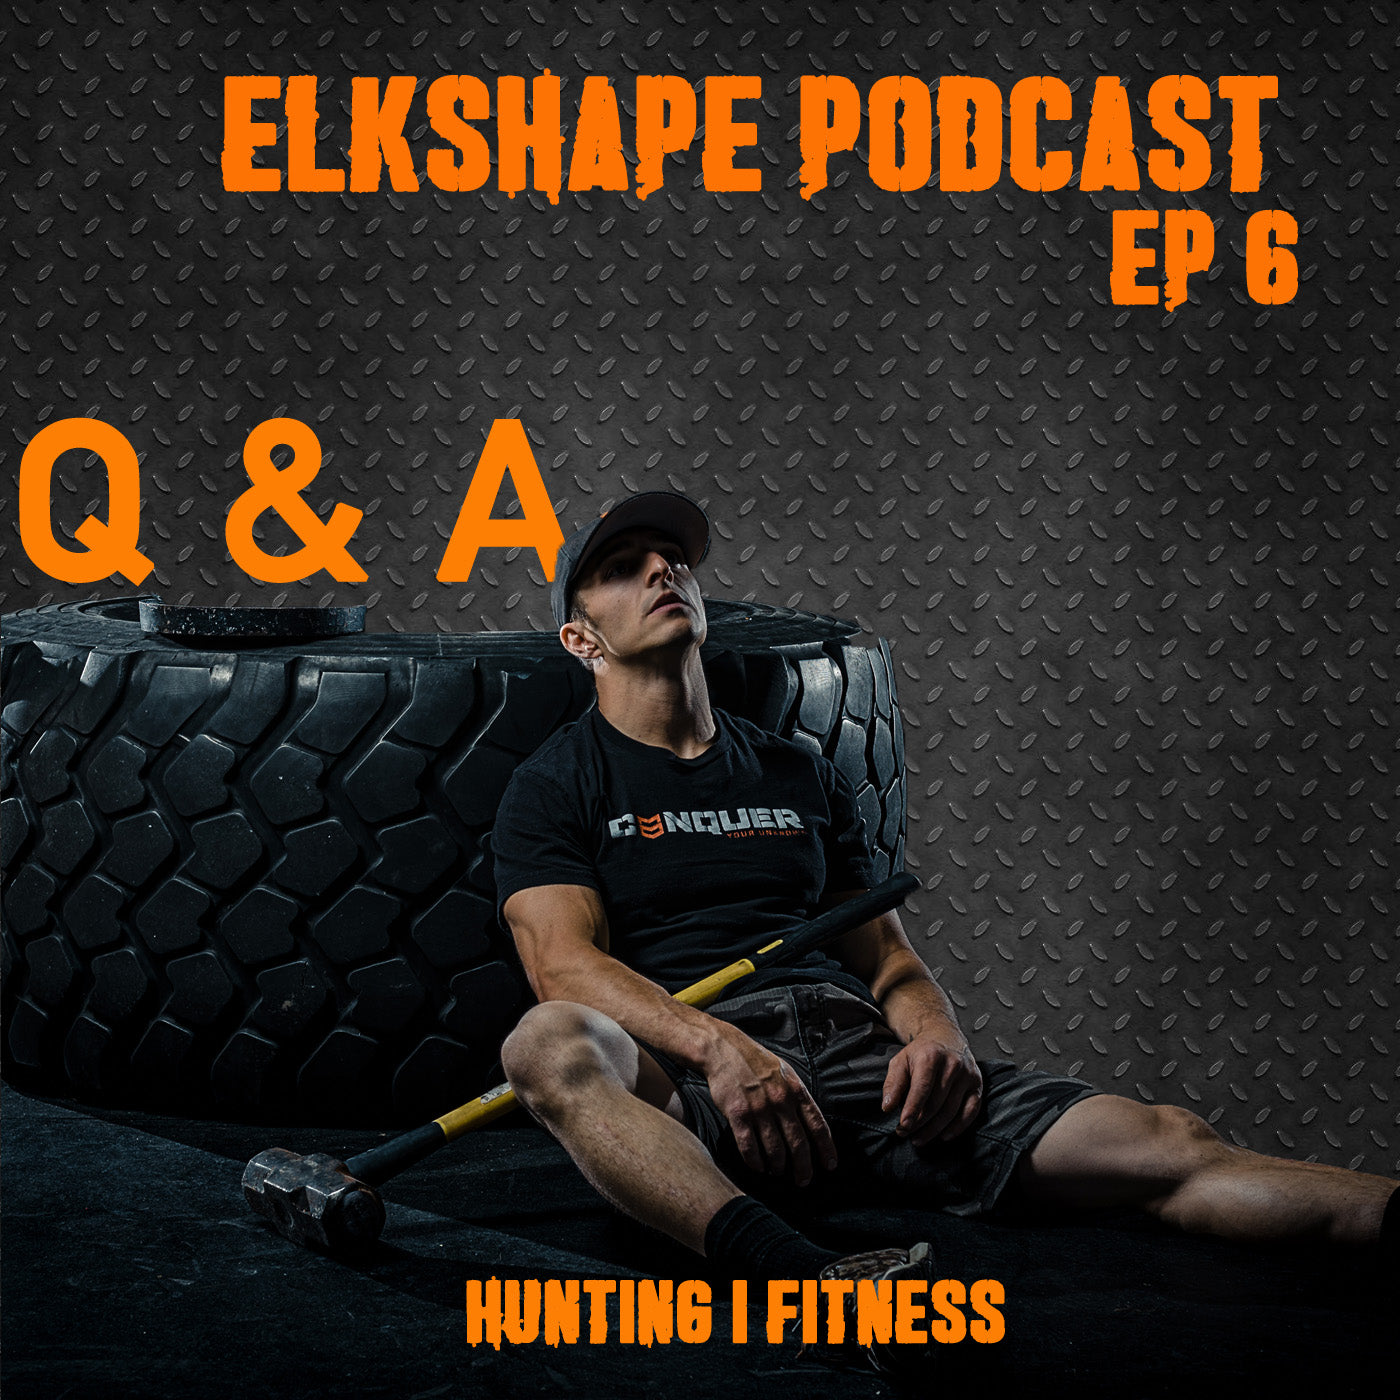 ElkShape Podcast EP 6 - Q & A